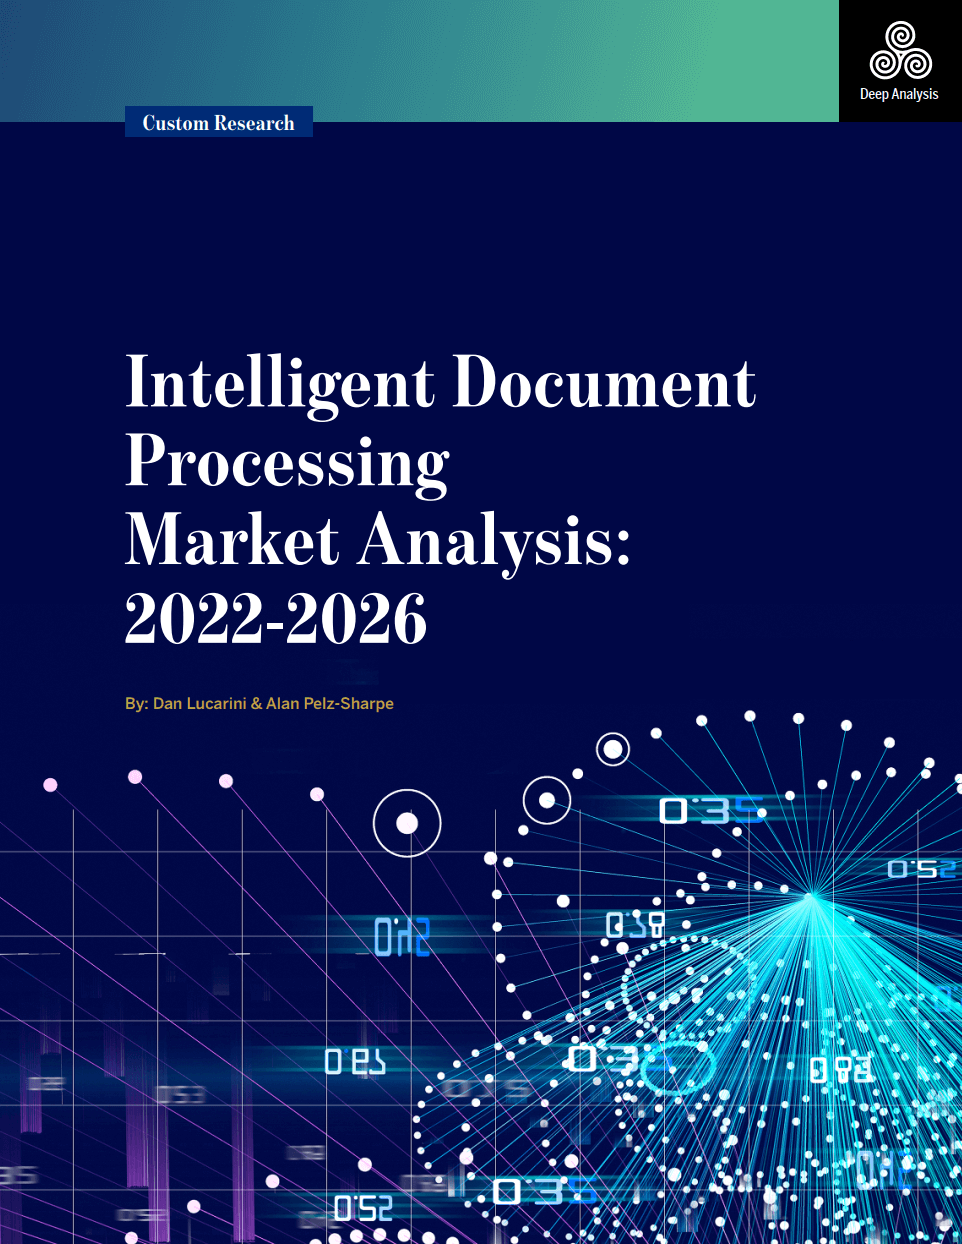 Intelligent document processing market analysis